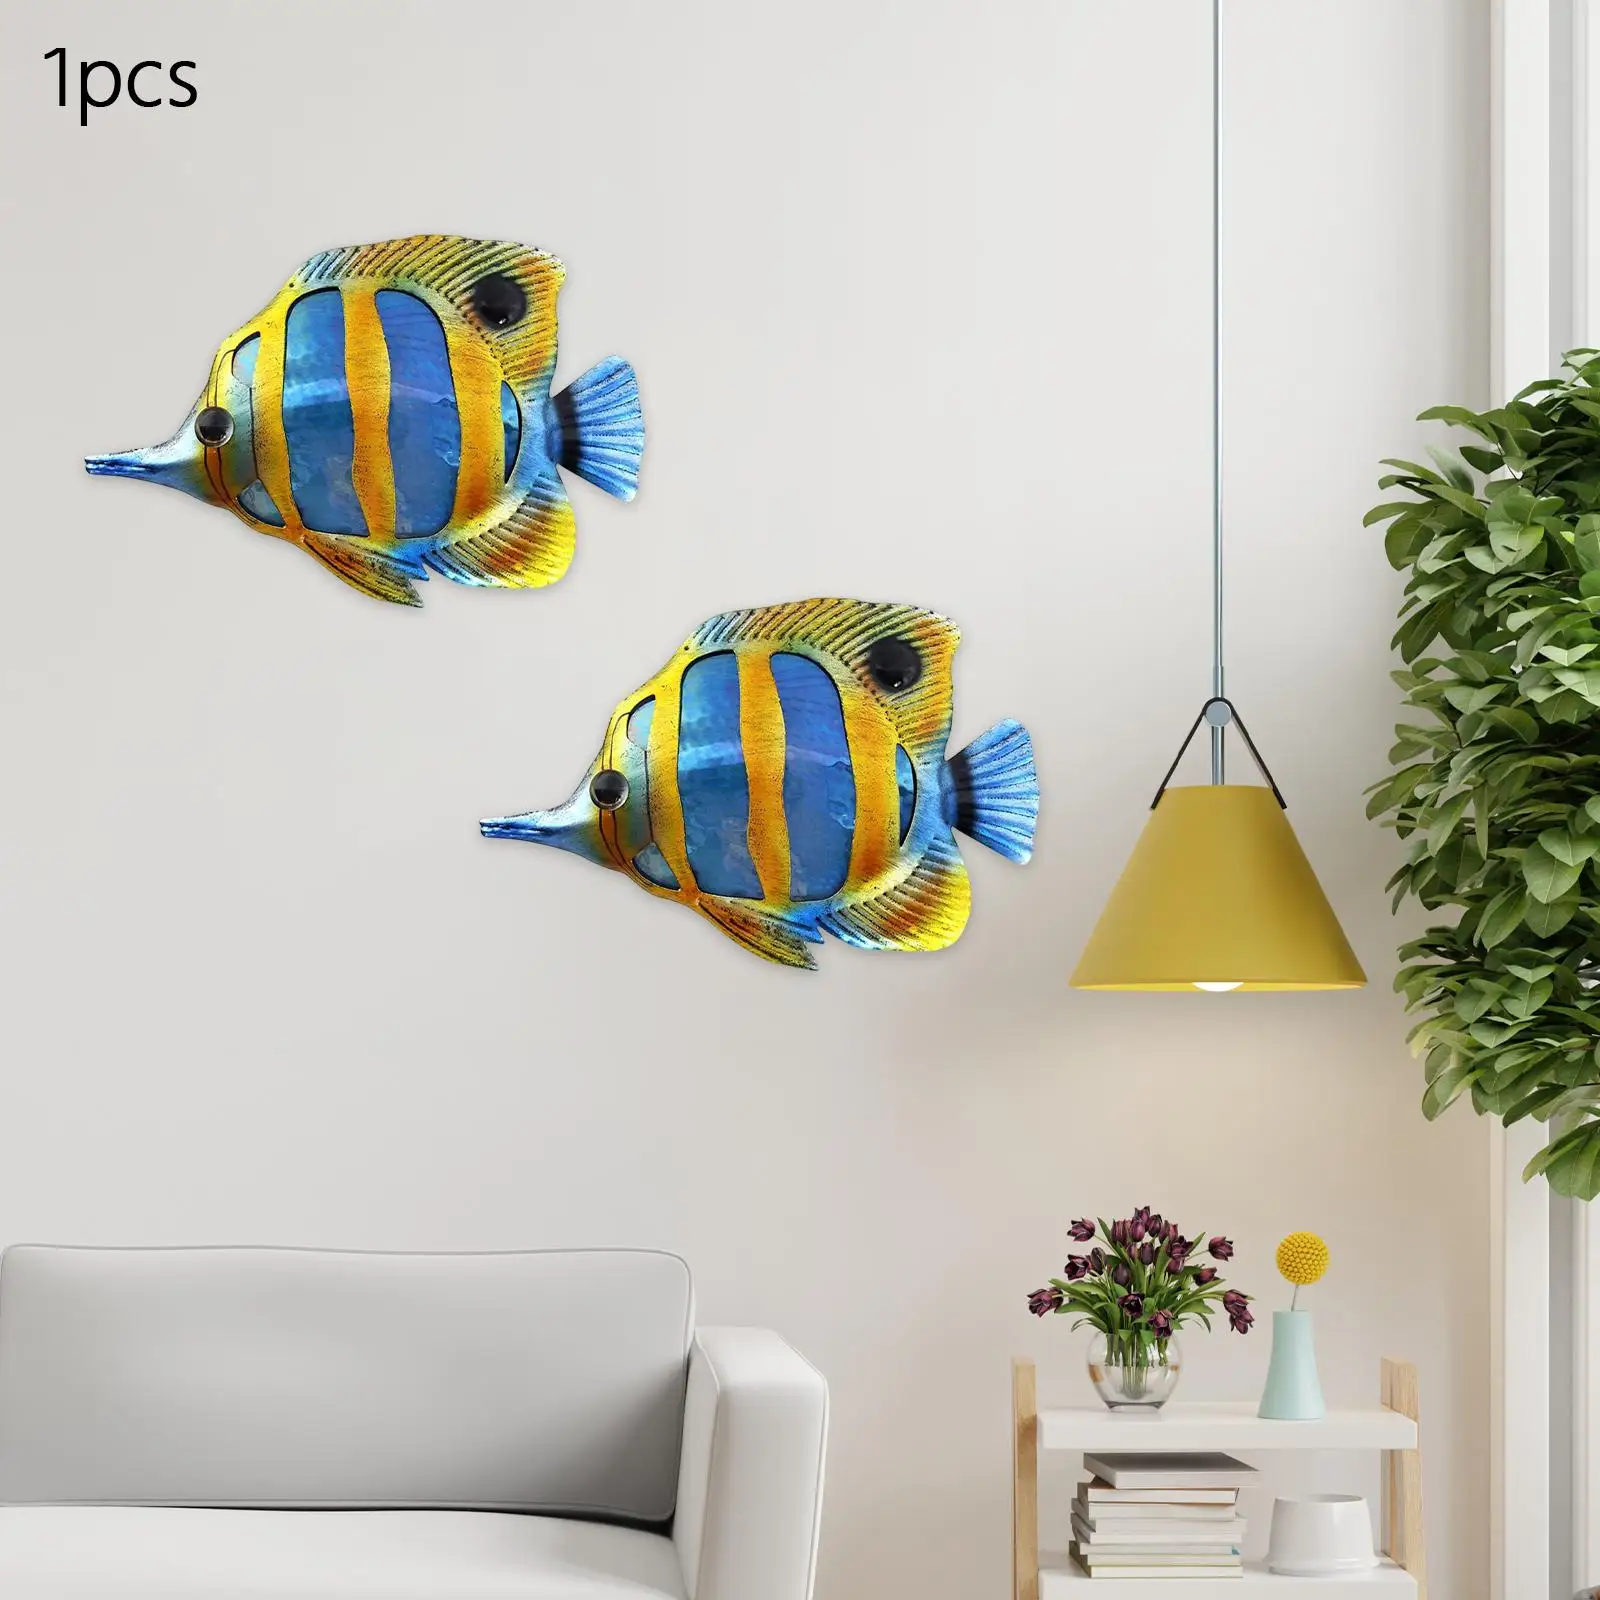 Metal Fish Wall Sculpture Decoration Hanging Creative Ornament for Bedroom Indoor Pool Bathroom Home